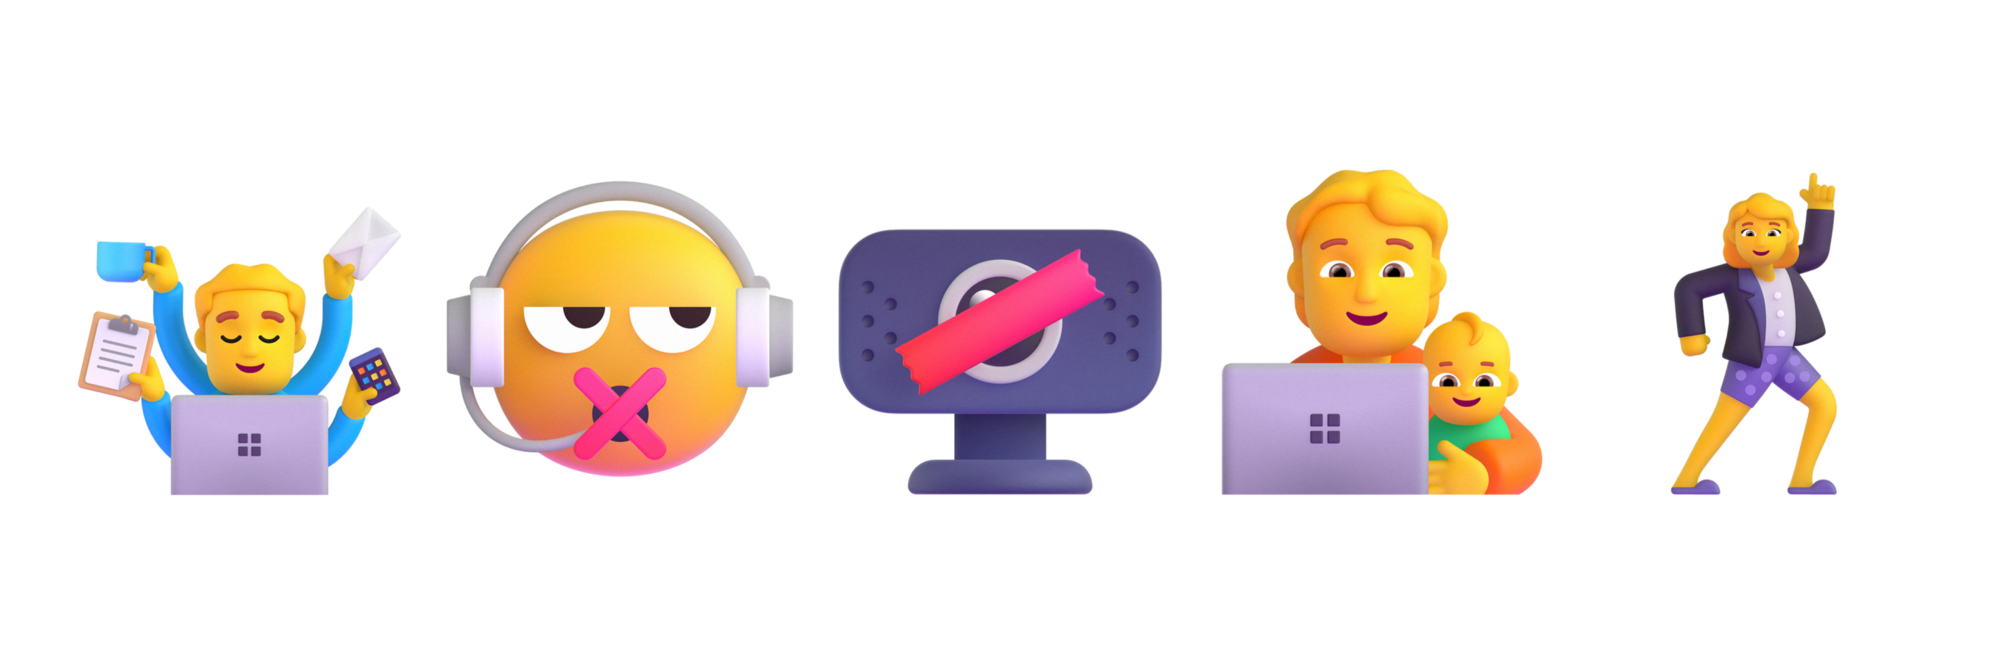 Emojipedia-Microsoft-Fluent-Work-From-Home-Emoji-Examples